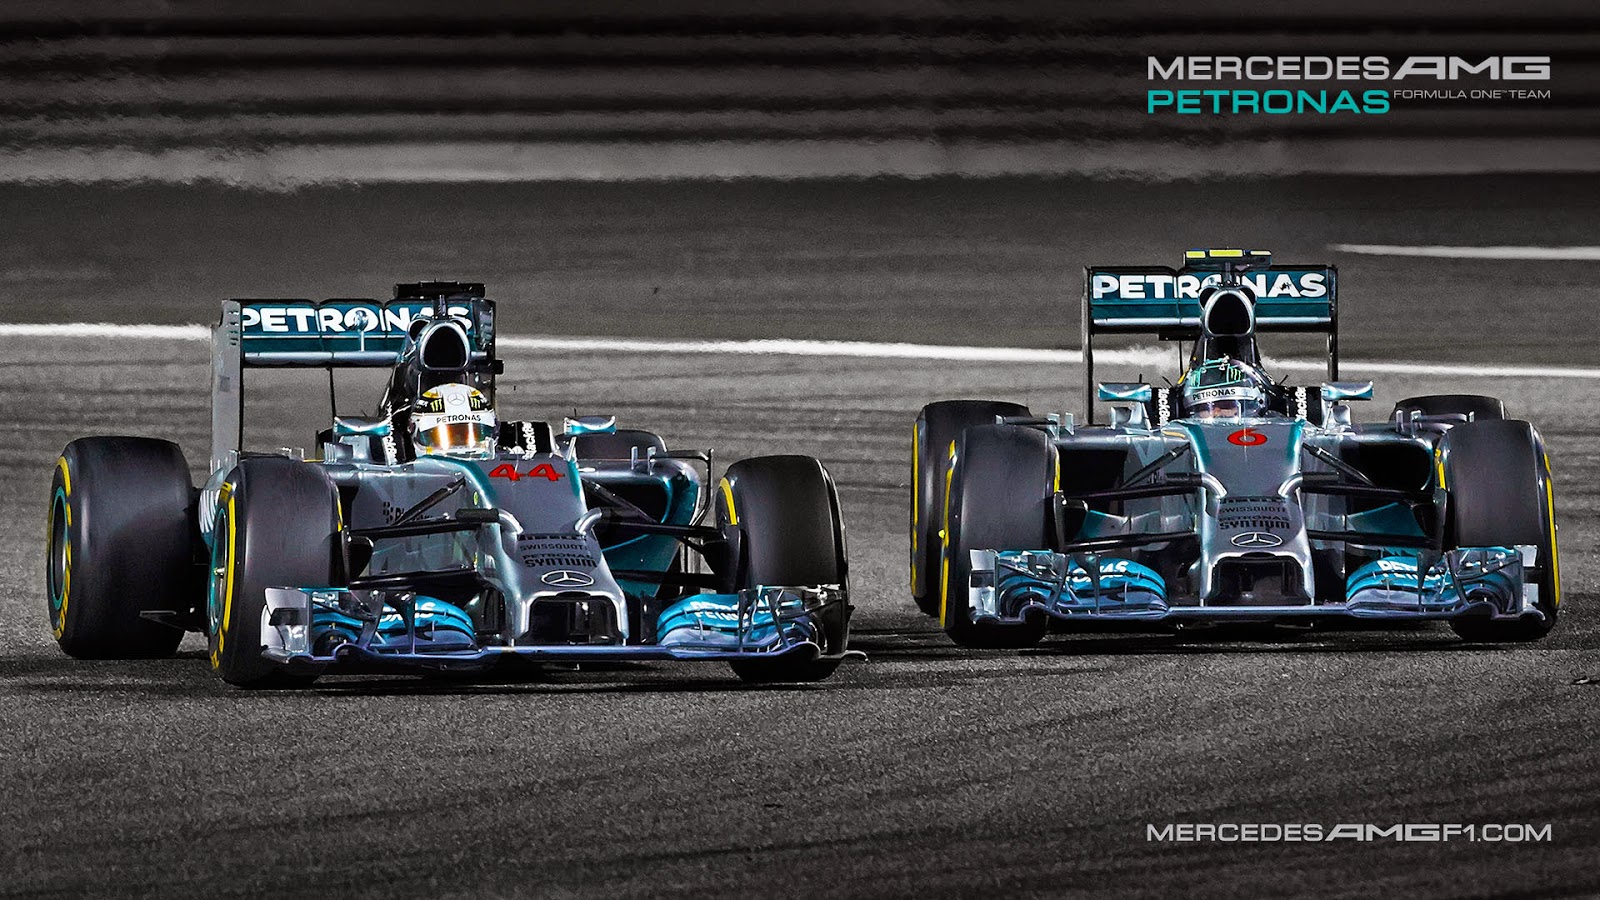 Mercedes AMG Petronas W05 2014 F1 Wallpaper via KFZoom ]